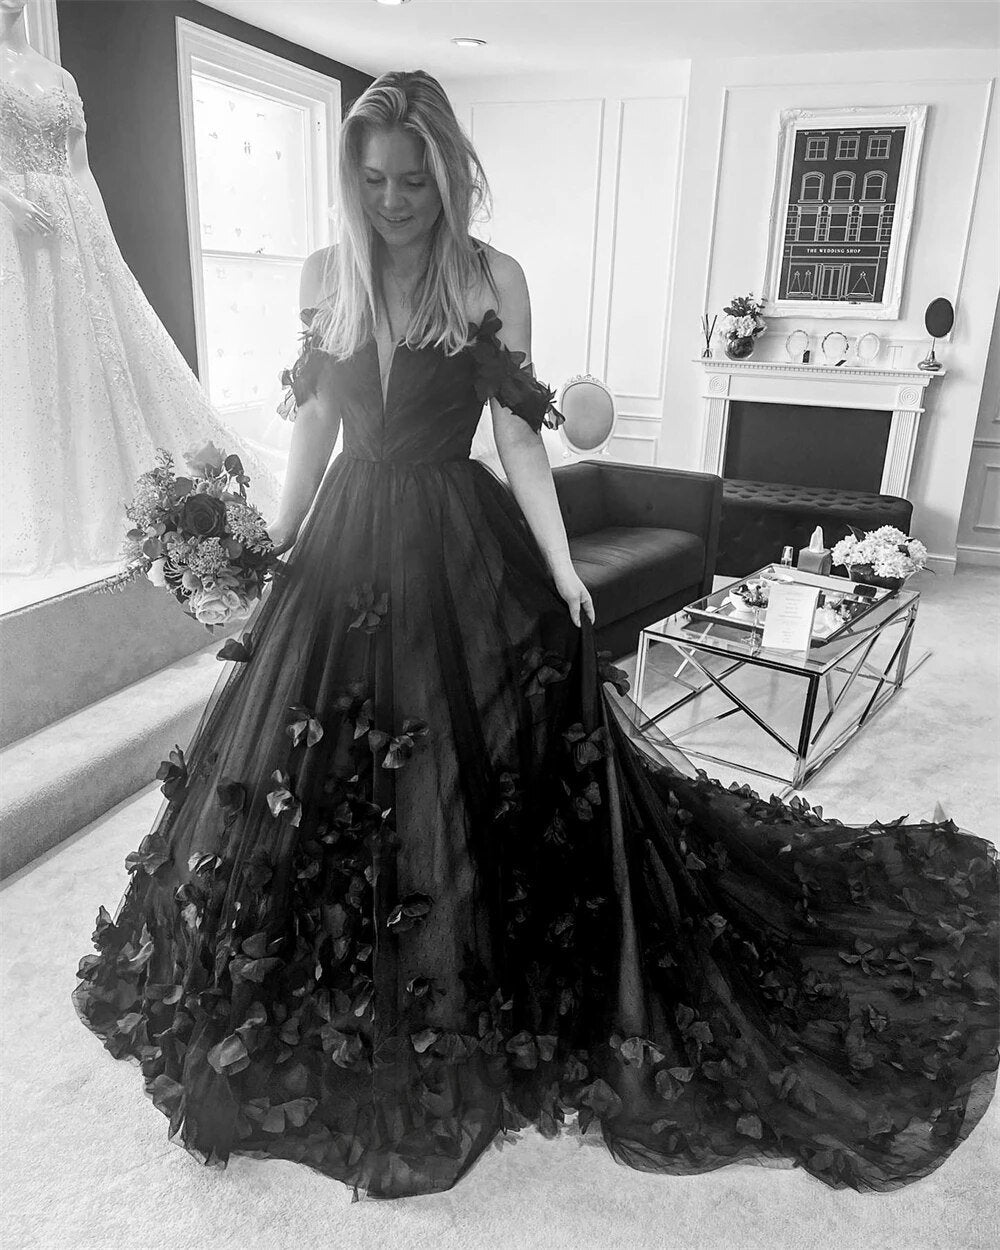 Trendy 3D Floral Applique Gothic Wedding Dress Long Off Shoulder Style Formal Dress Black Bridal Gown Black Wedding Dress Free Customization